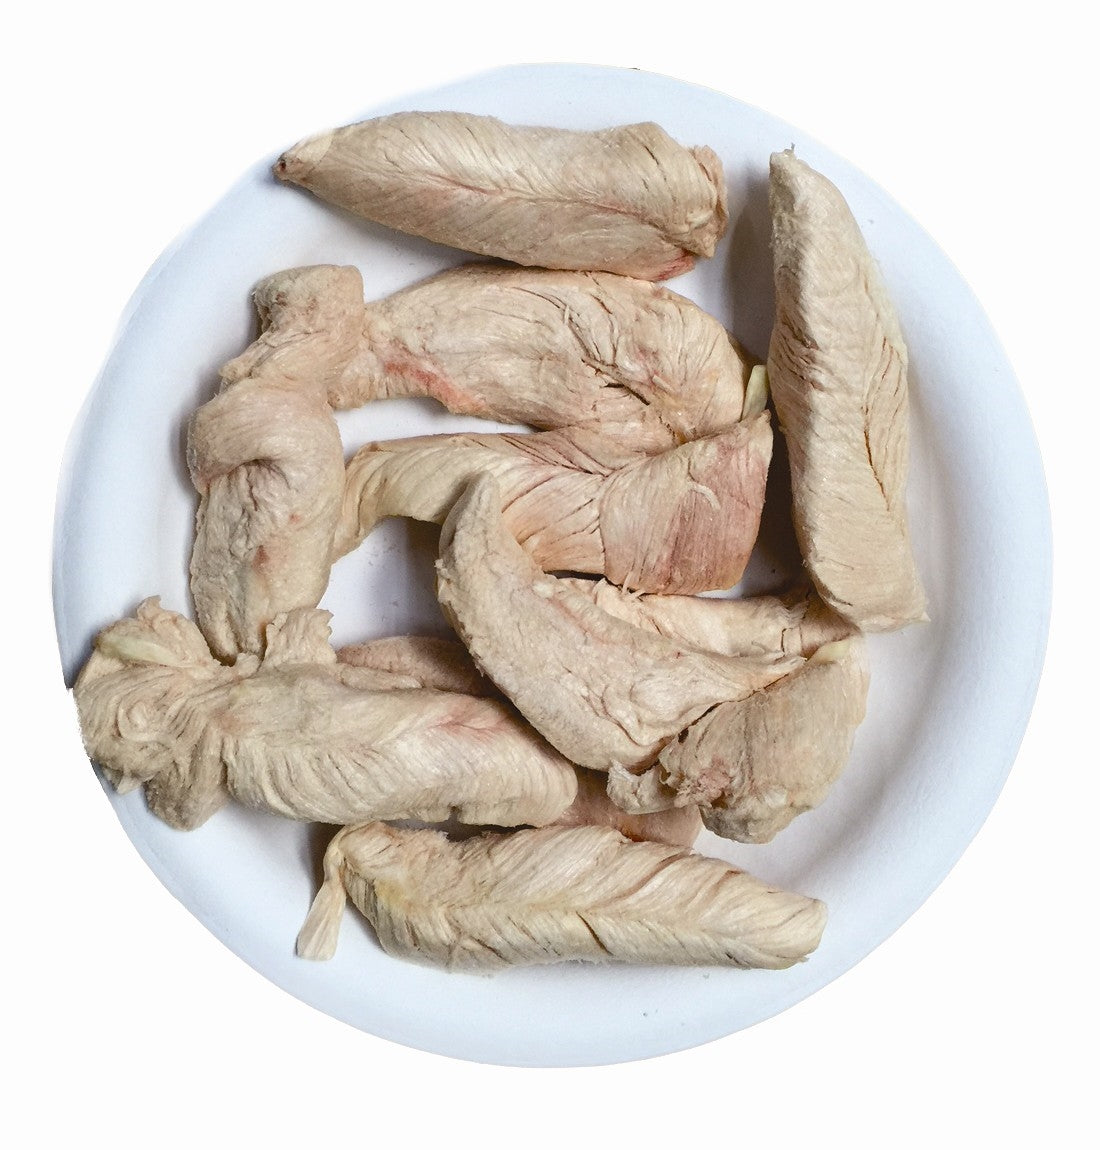 Freeze Dried Uncooked Chicken Tenders